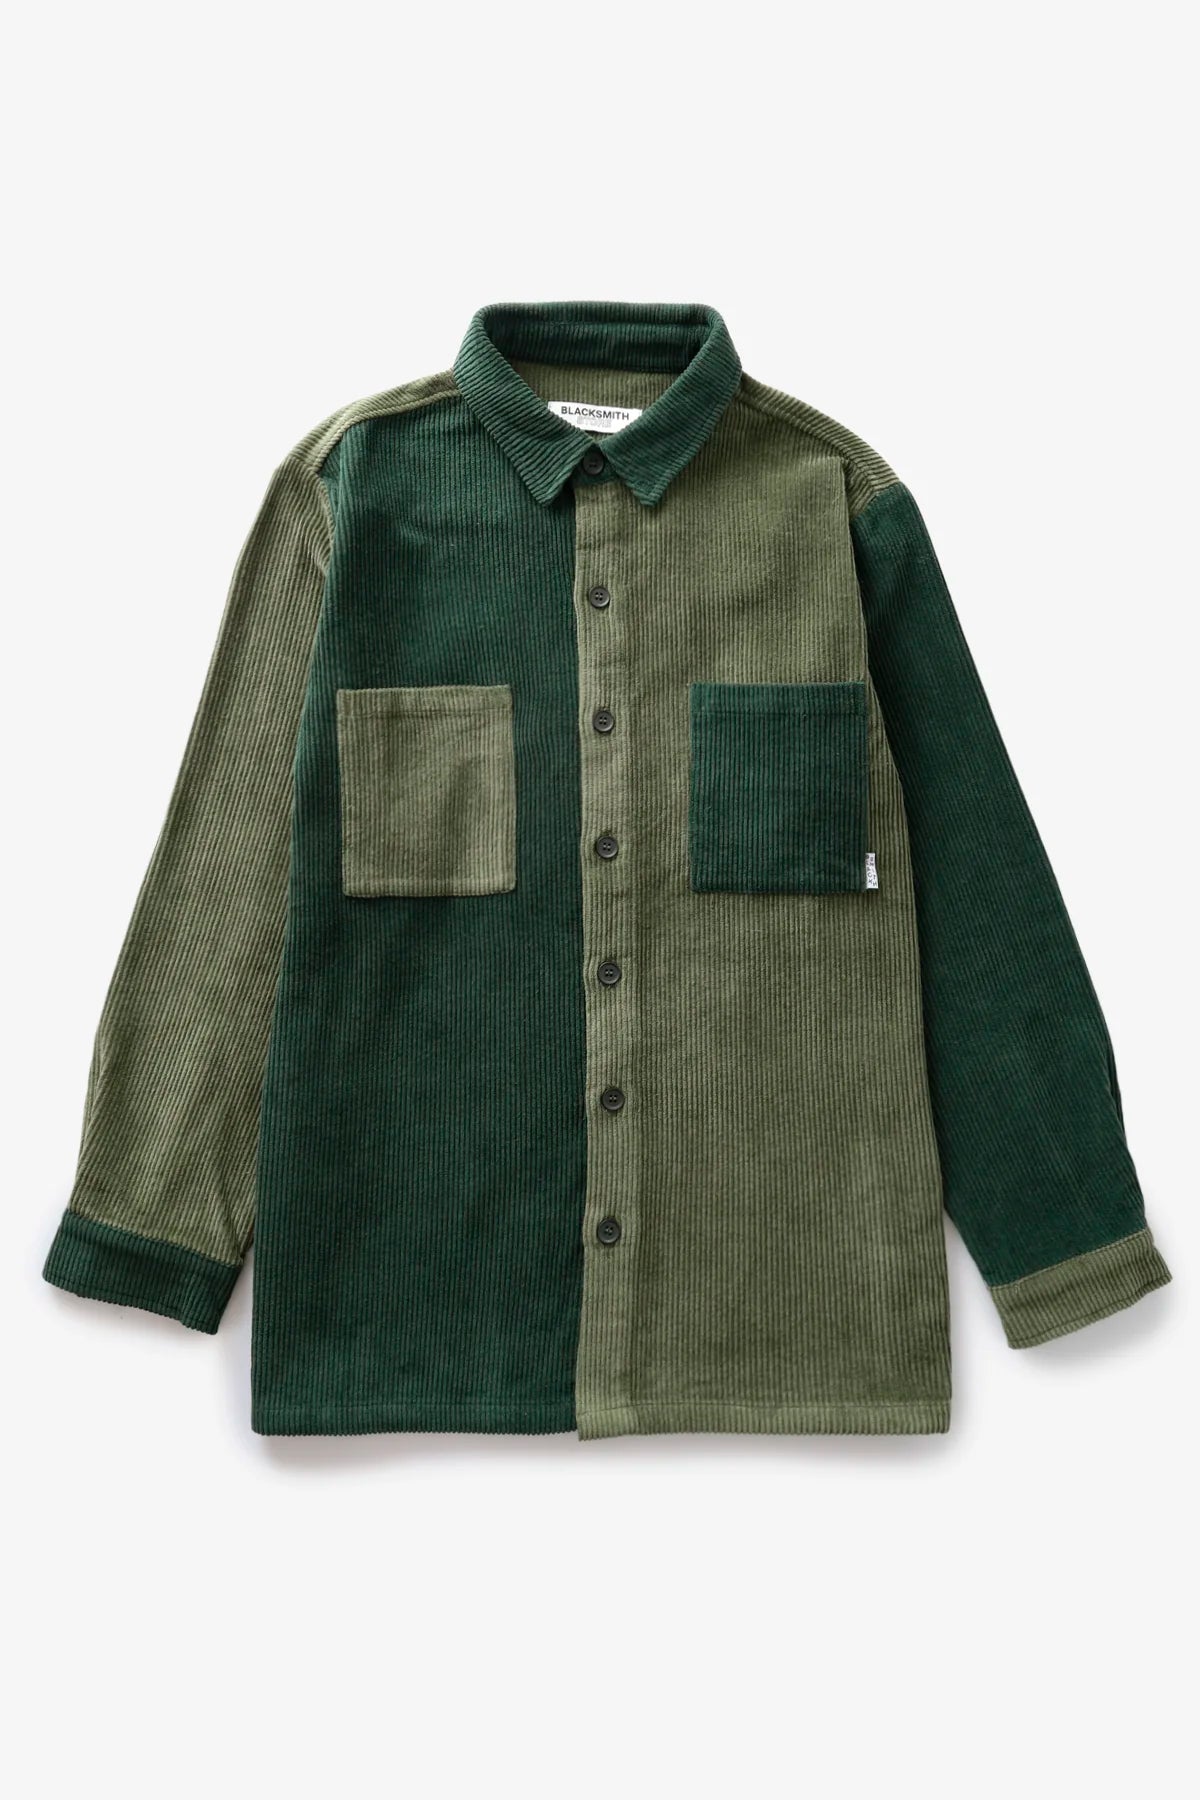 Blacksmith - Patchwork Corduroy Shirt - Green